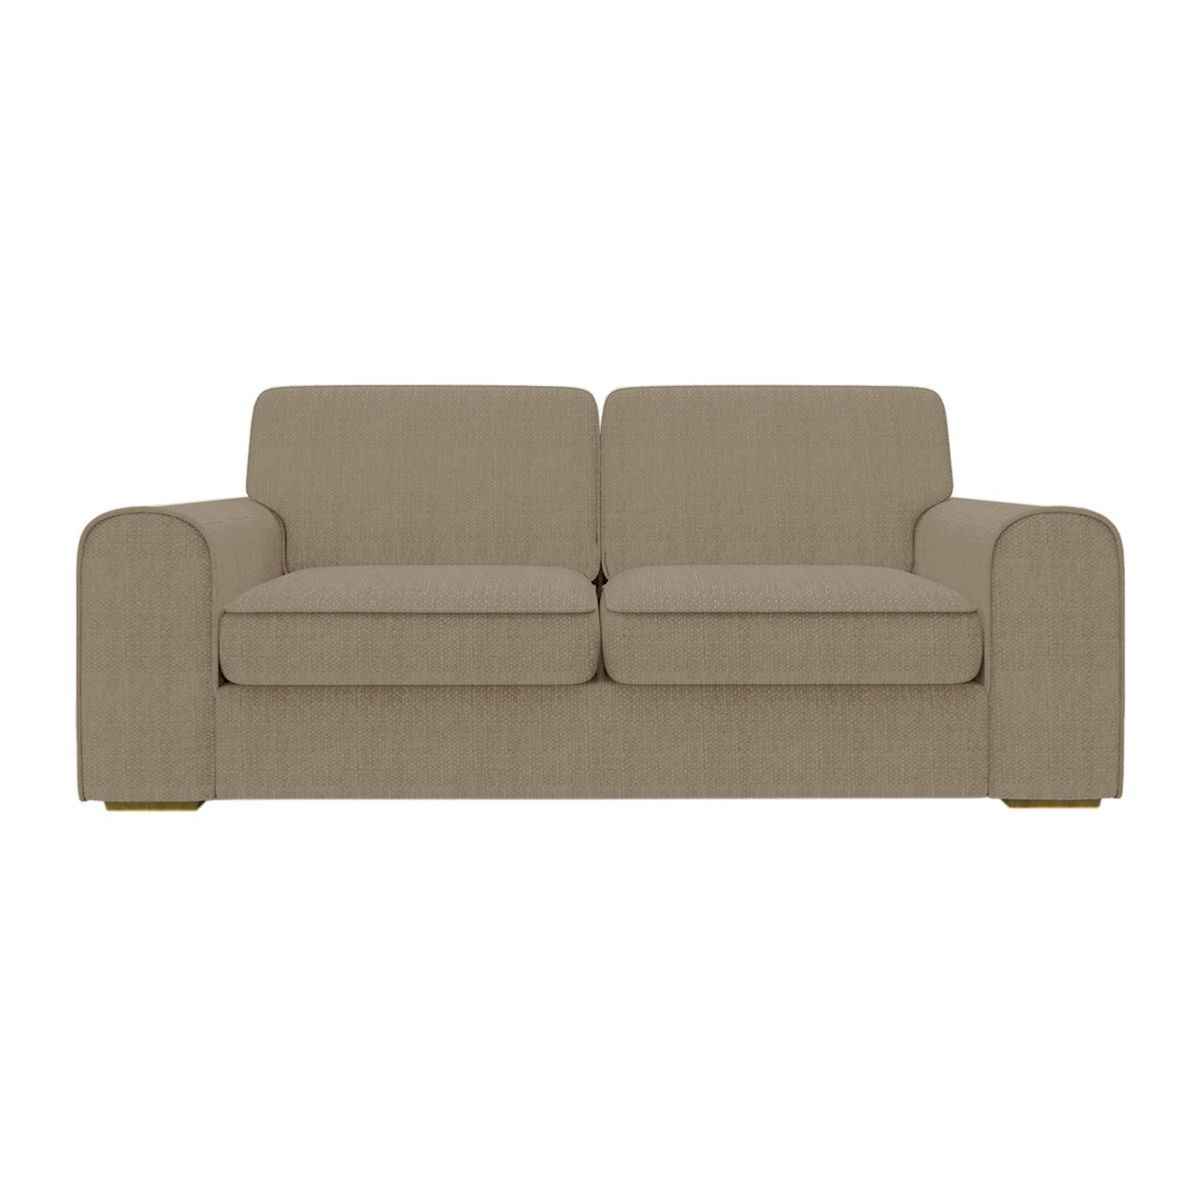 Colista 3 Seater Sofa, beige - image 1